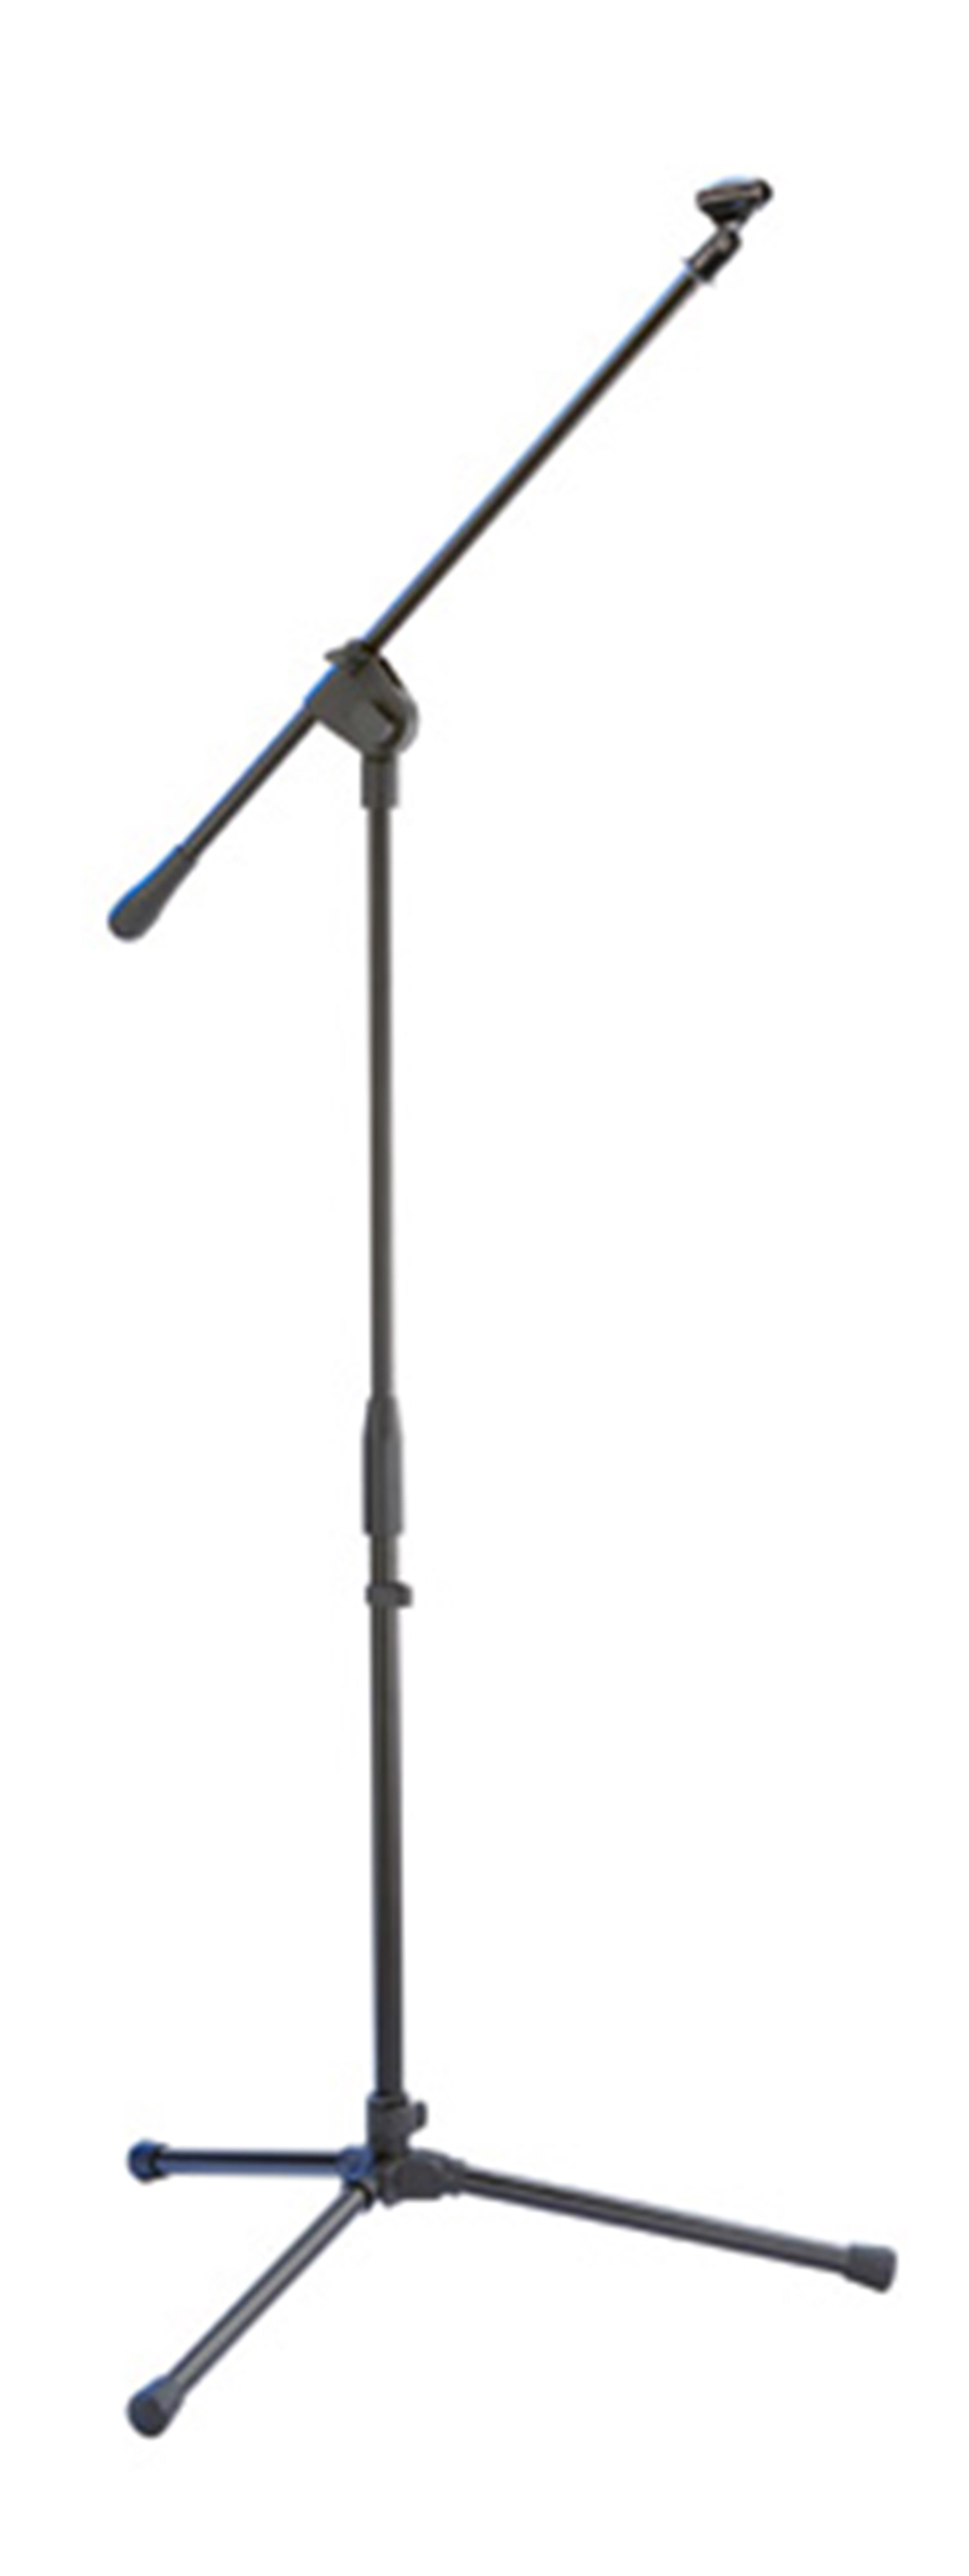 Samson-MK10-Asta-leggera-per-Microfono-Giraffa-Treppiede-sku-7685138001010